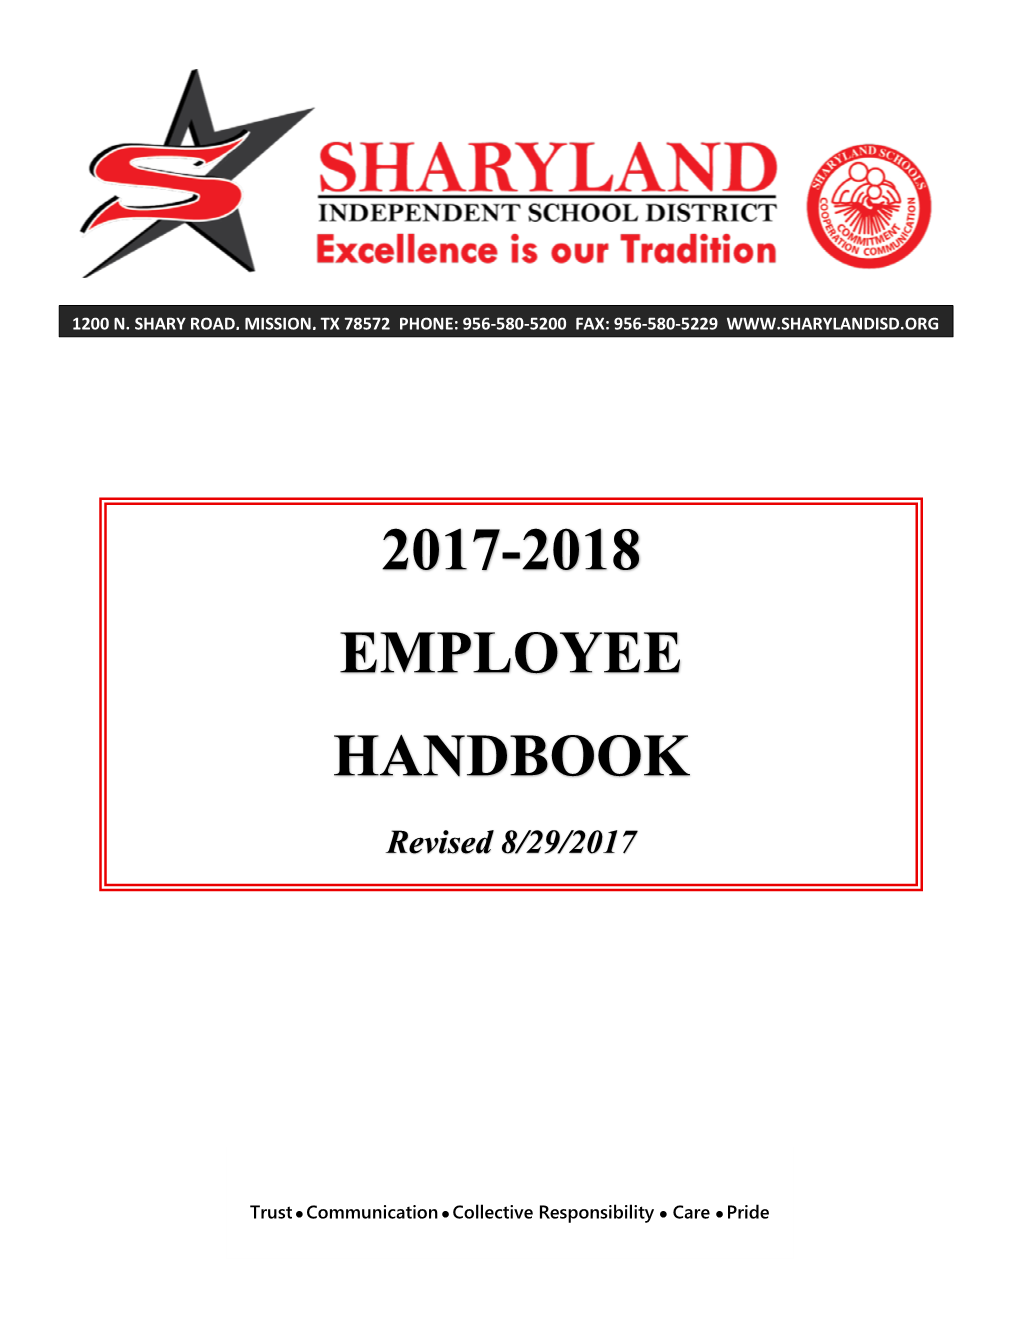 2017-2018 Employee Handbook